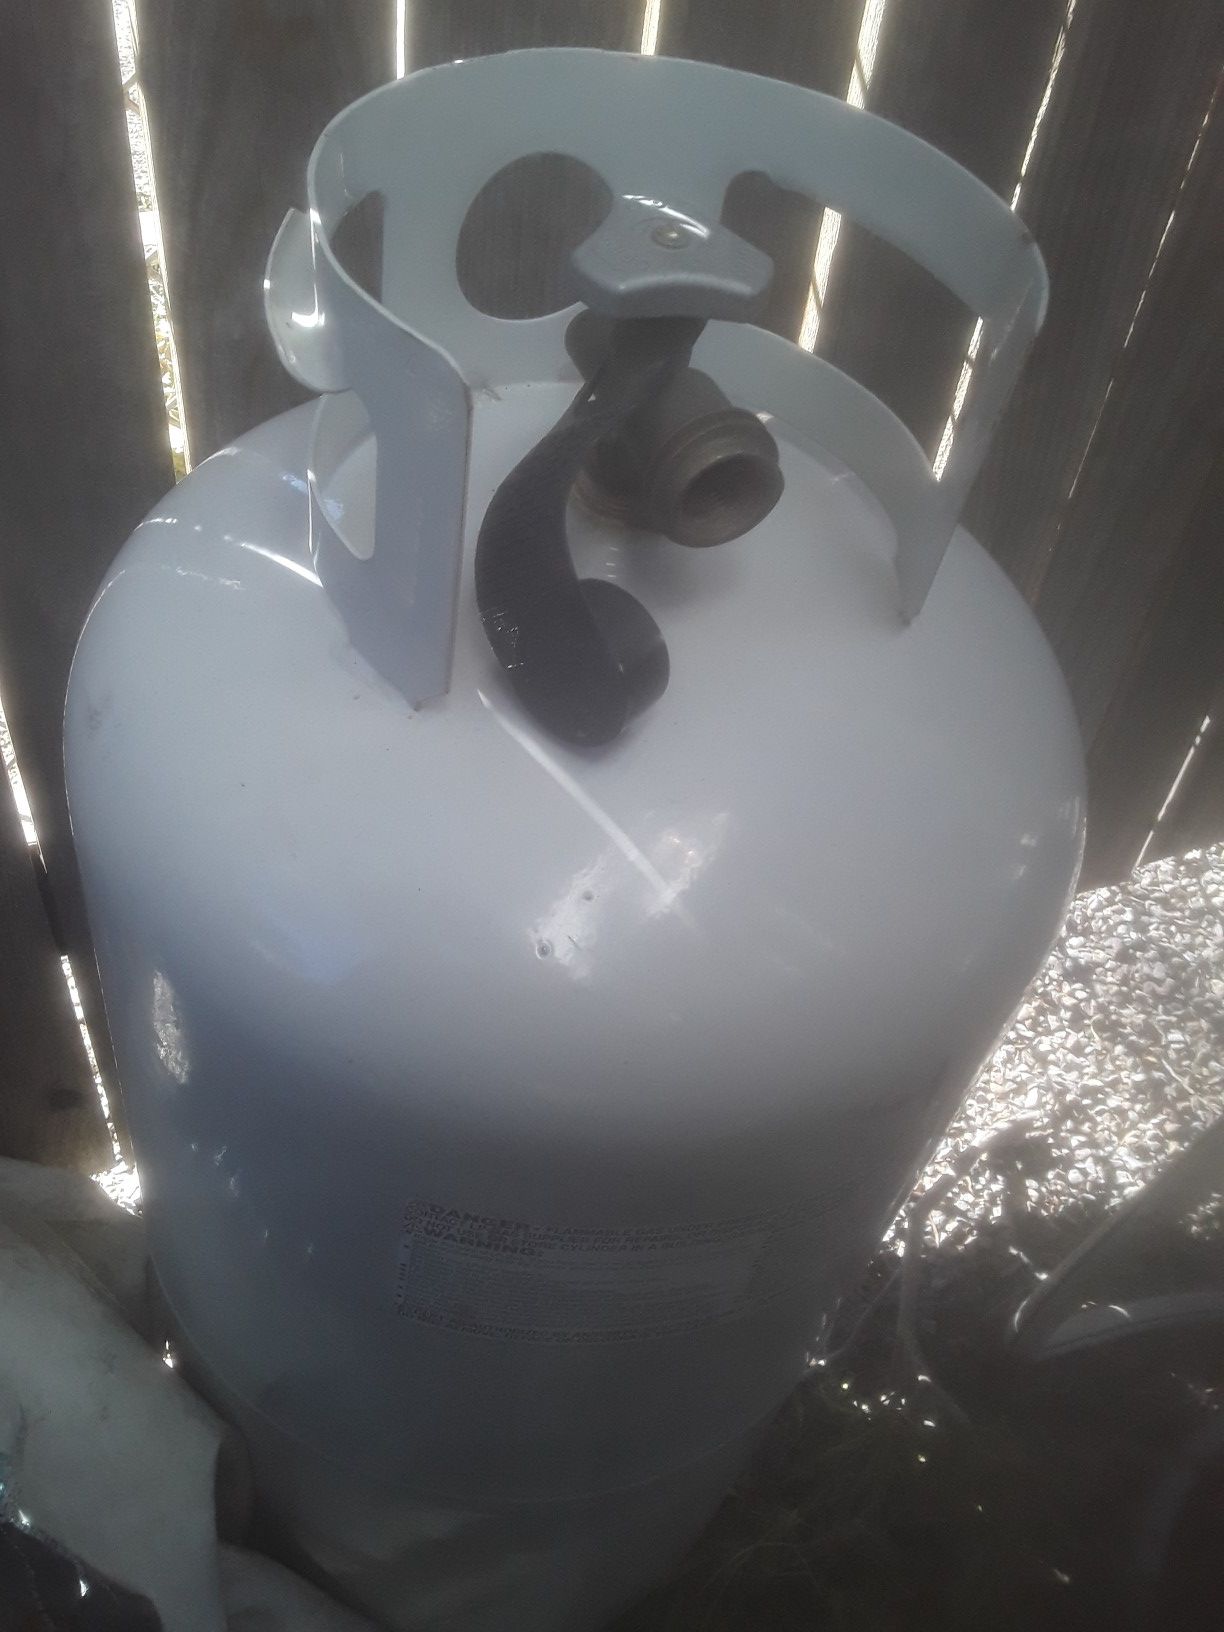 40 lb propane tank